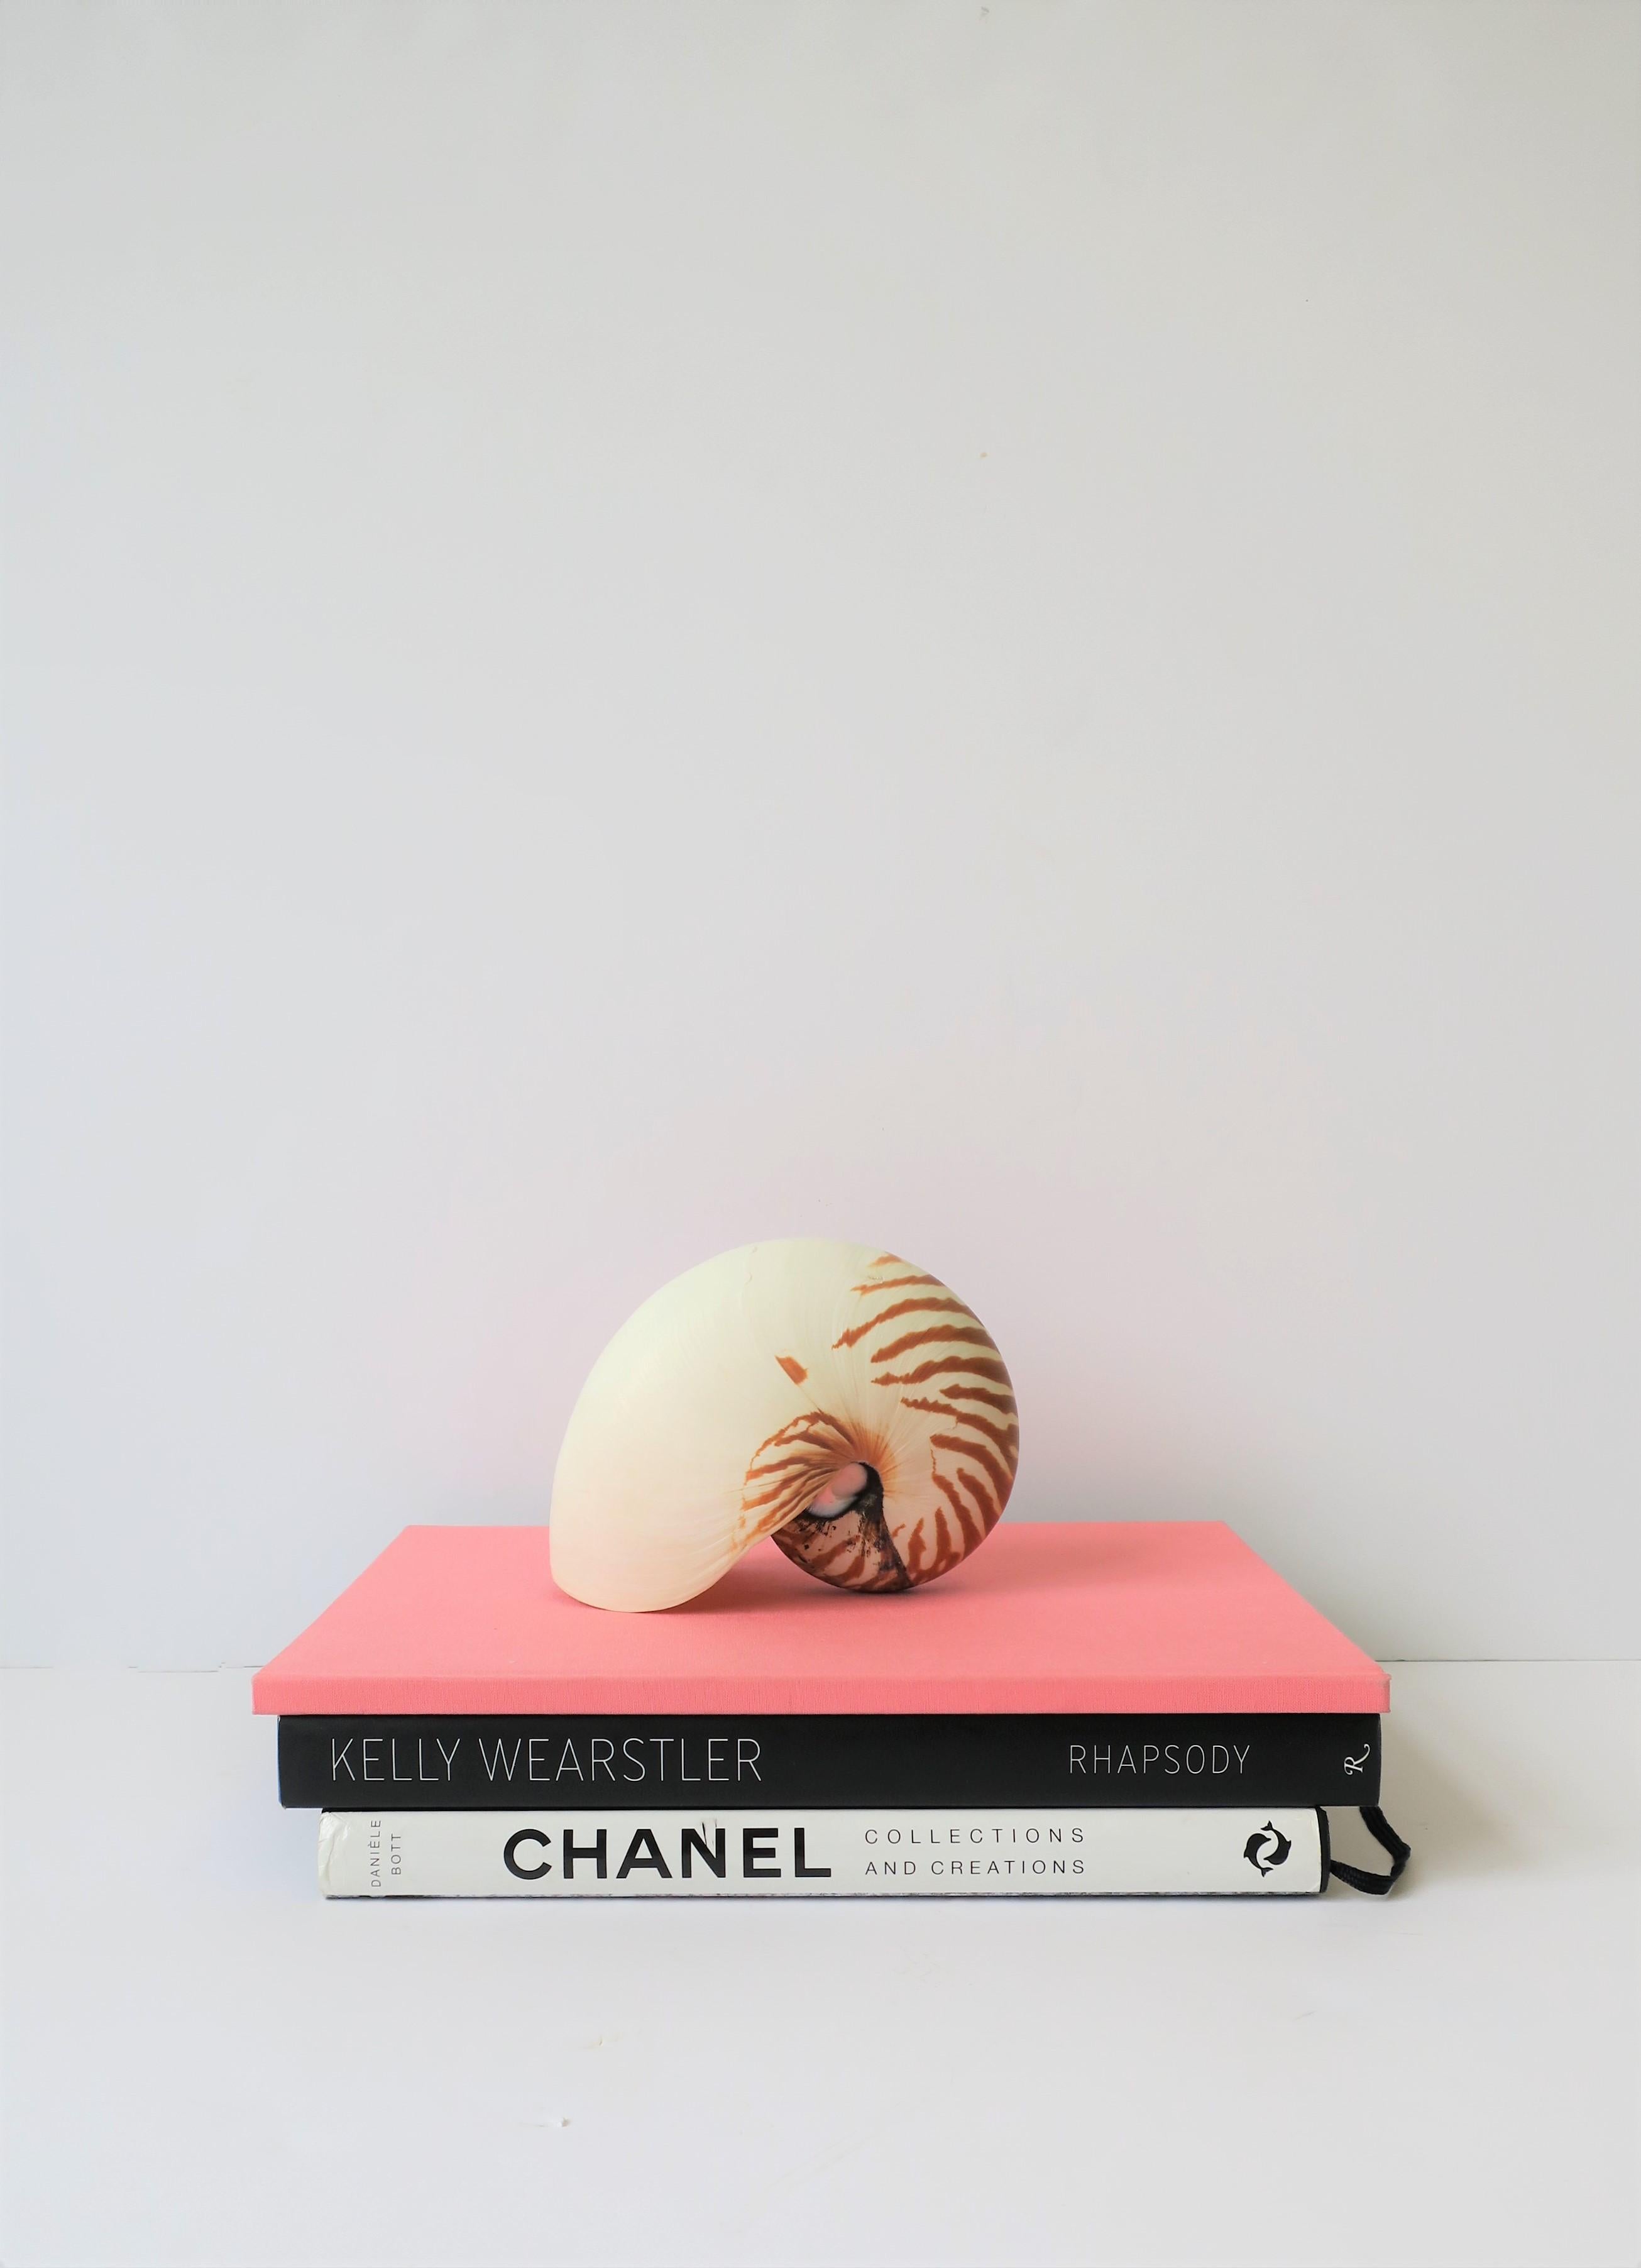 A beautiful nautilus seashell with tiger-like design. 

Seashell measures: 3